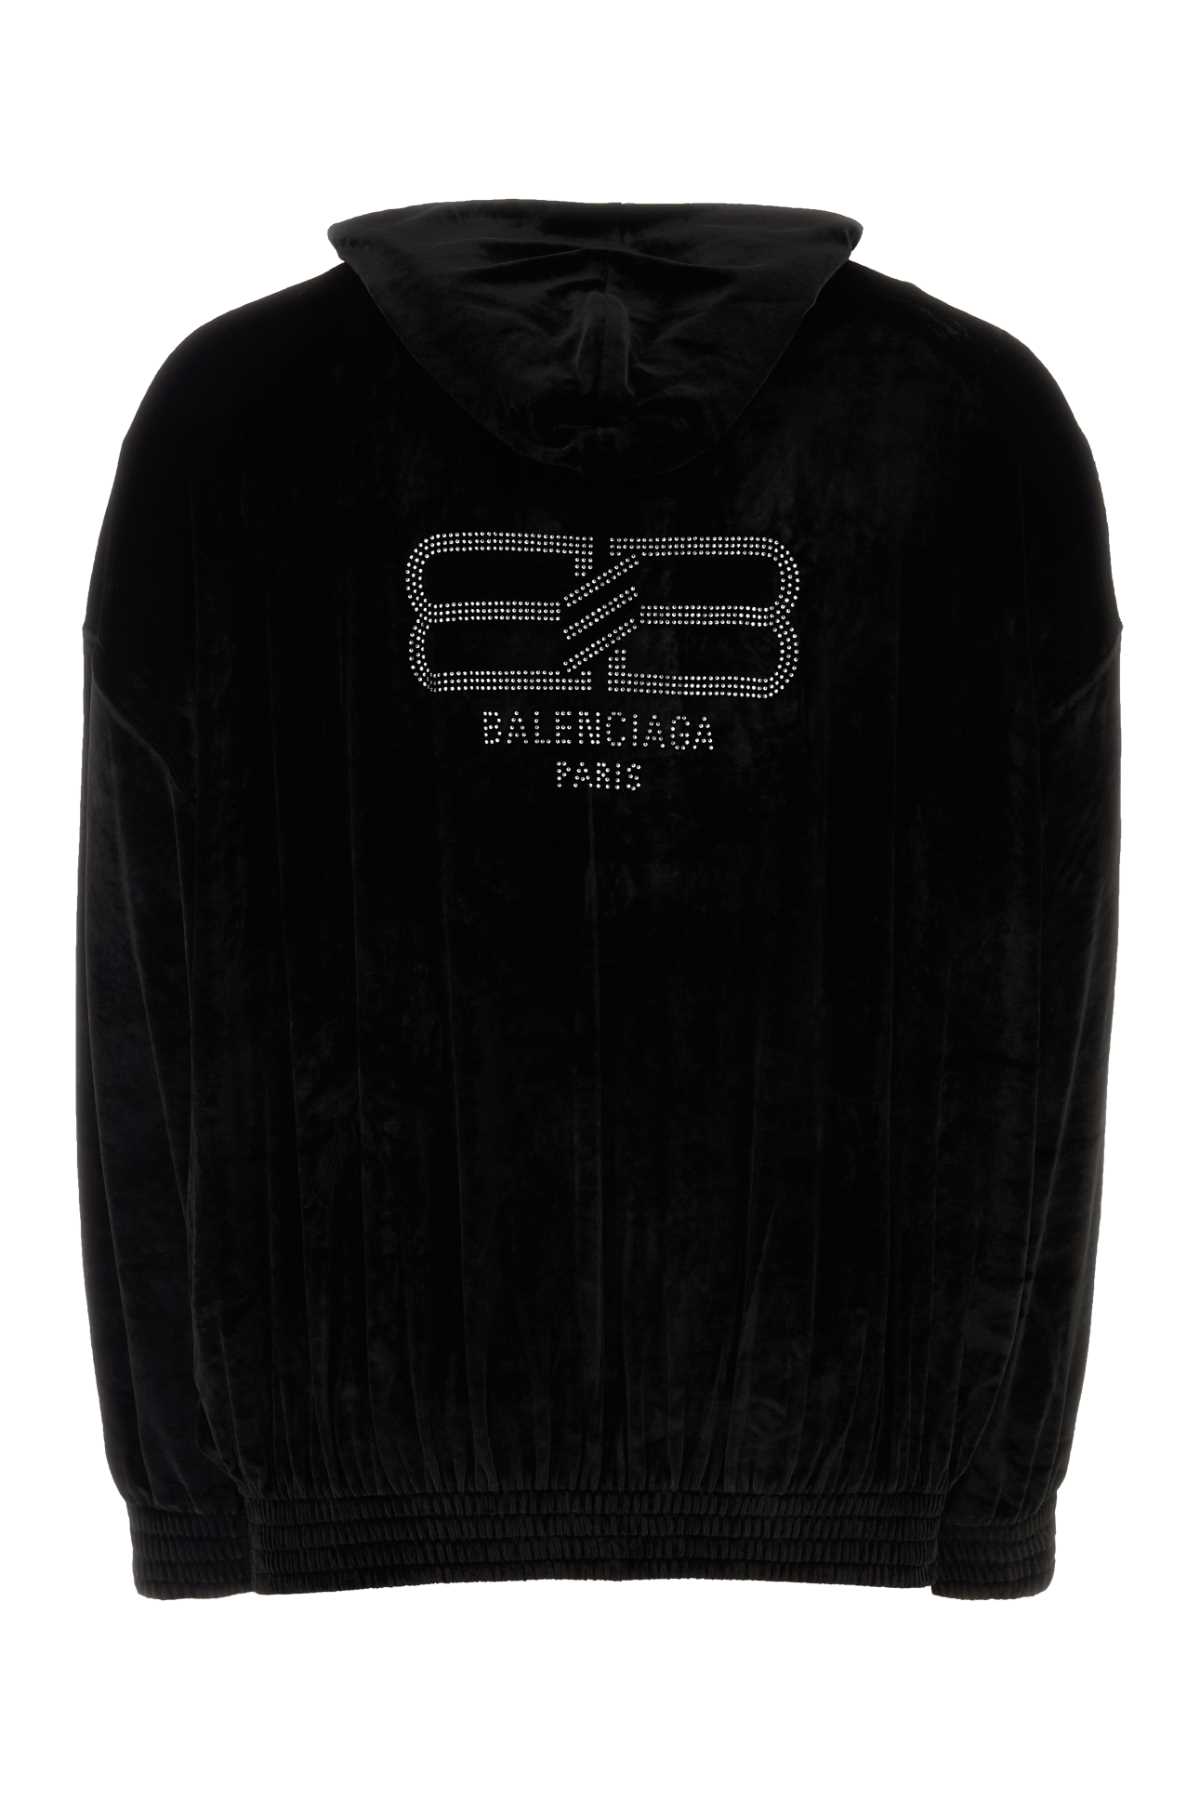 Balenciaga Black Velvet Oversize Sweatshirt In 1000